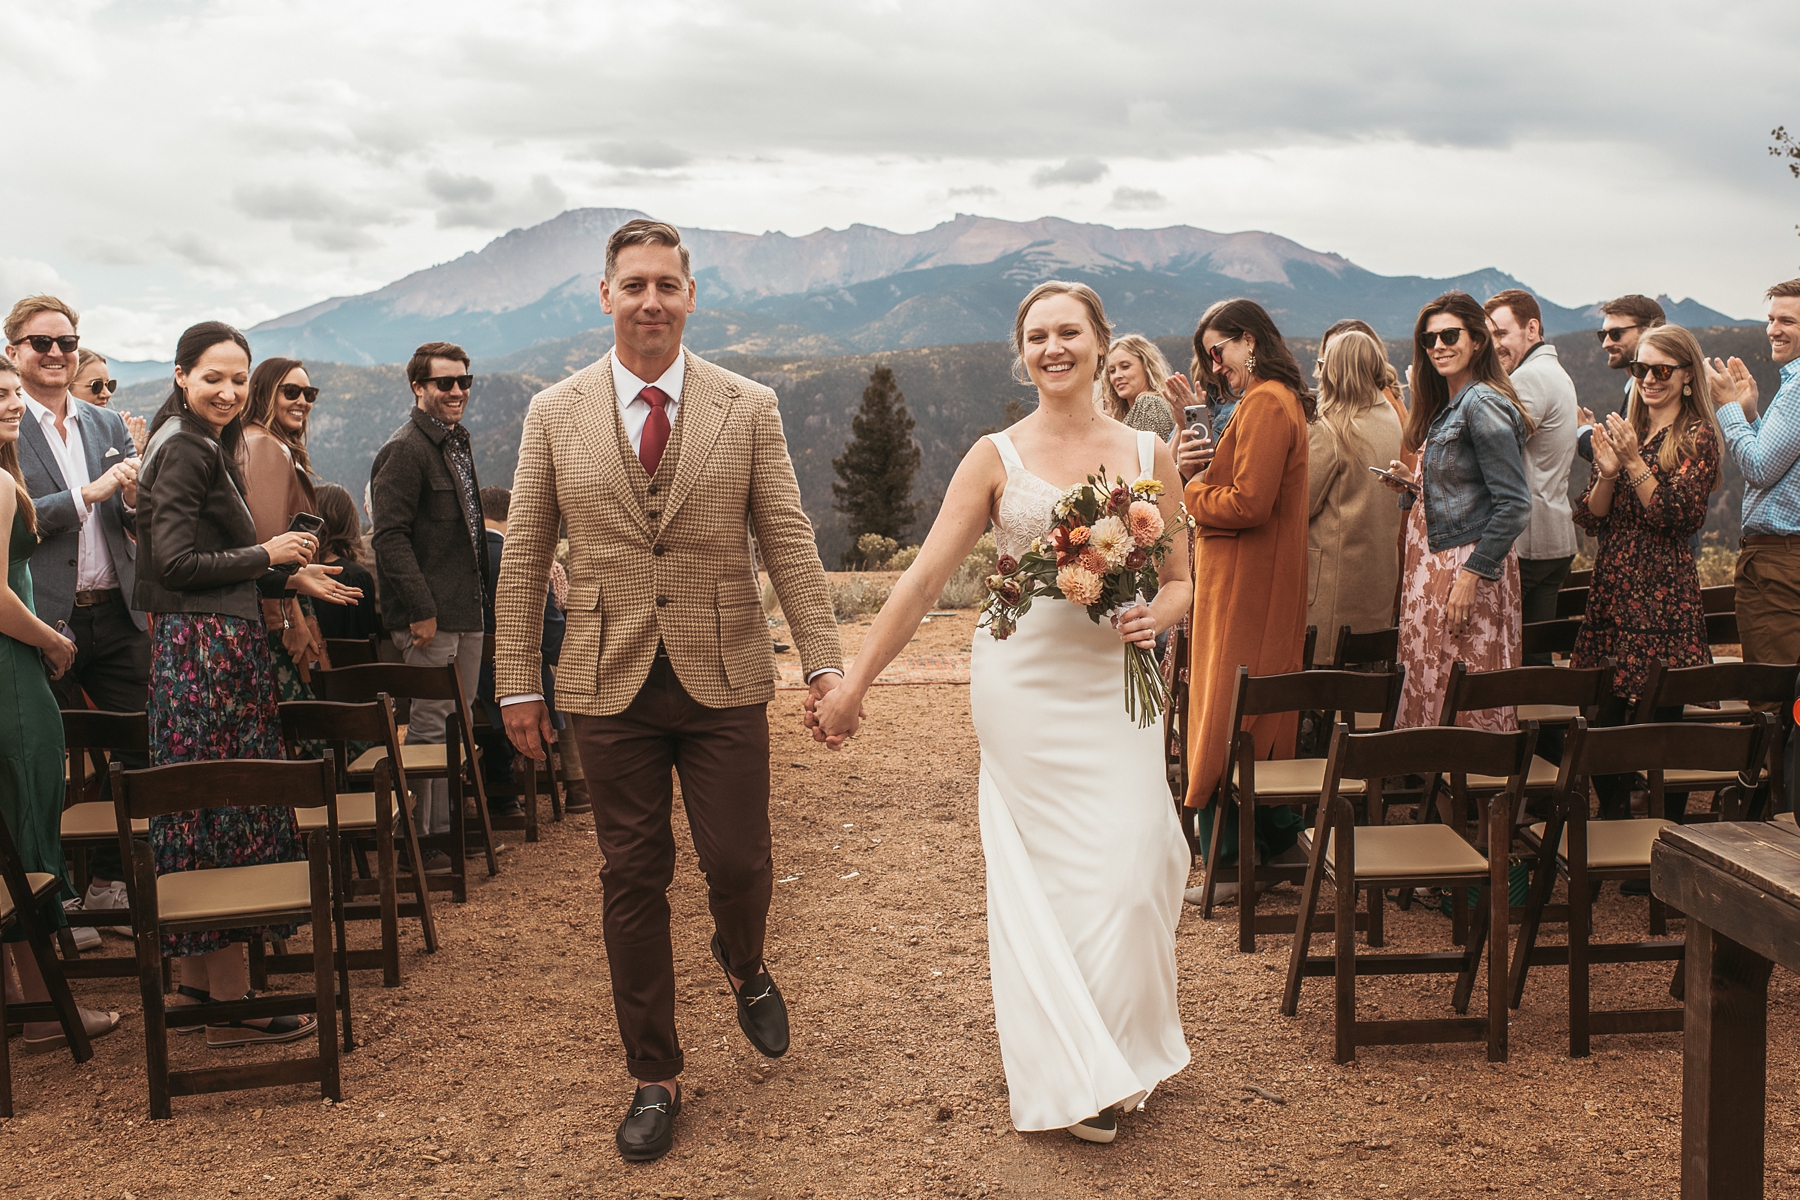 Bride and groom walking down the aisle at Airbnb wedding venue in Colorado